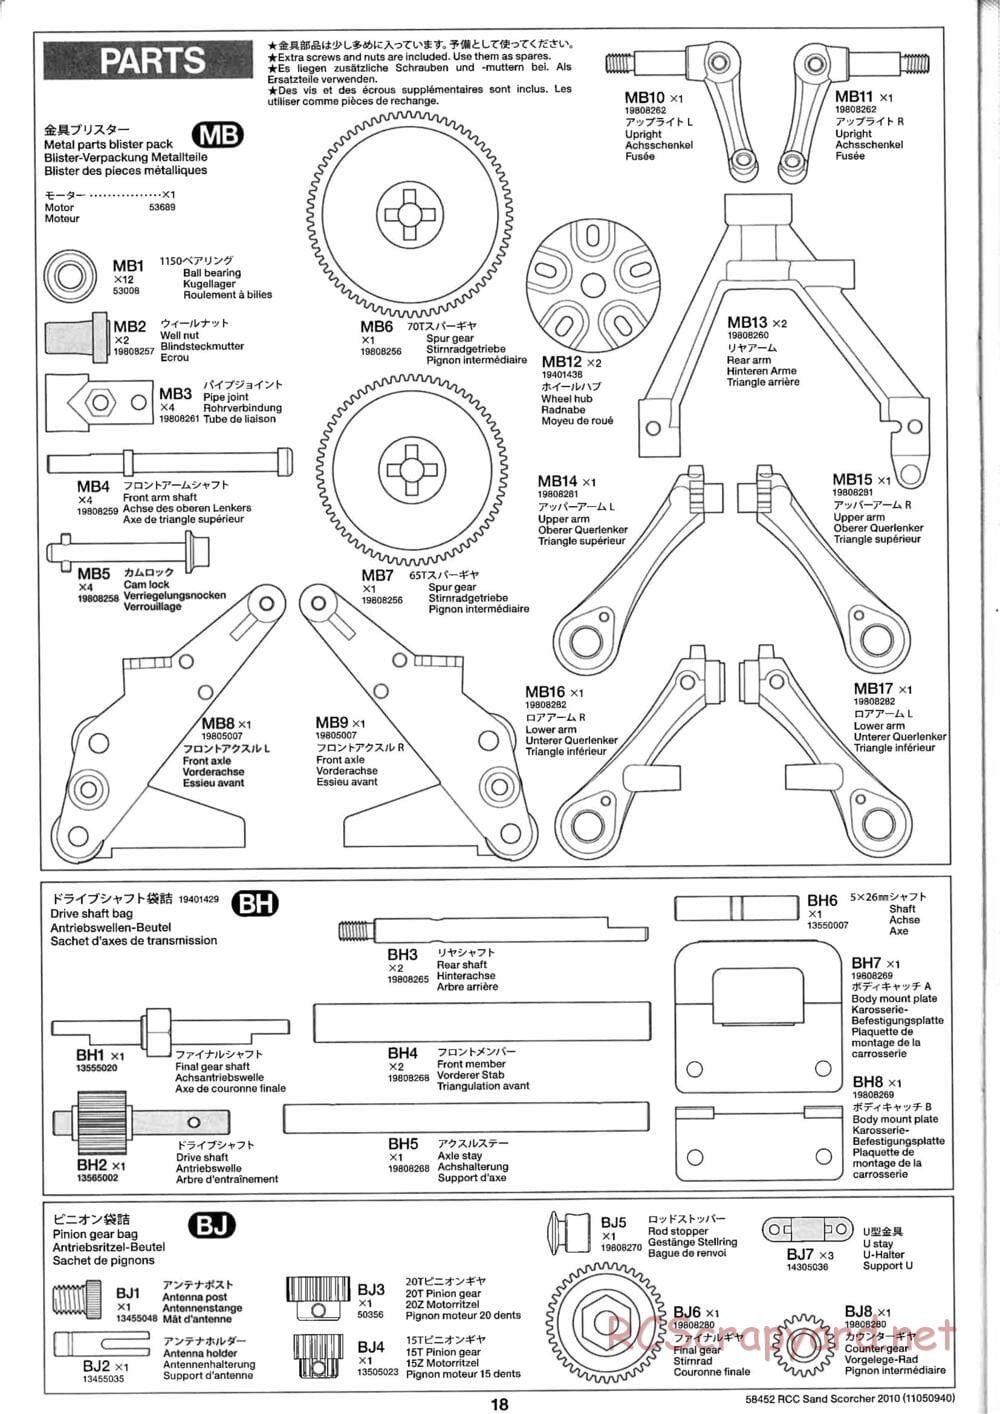 Tamiya - Sand Scorcher 2010 - SRB v1 Chassis - Manual - Page 18